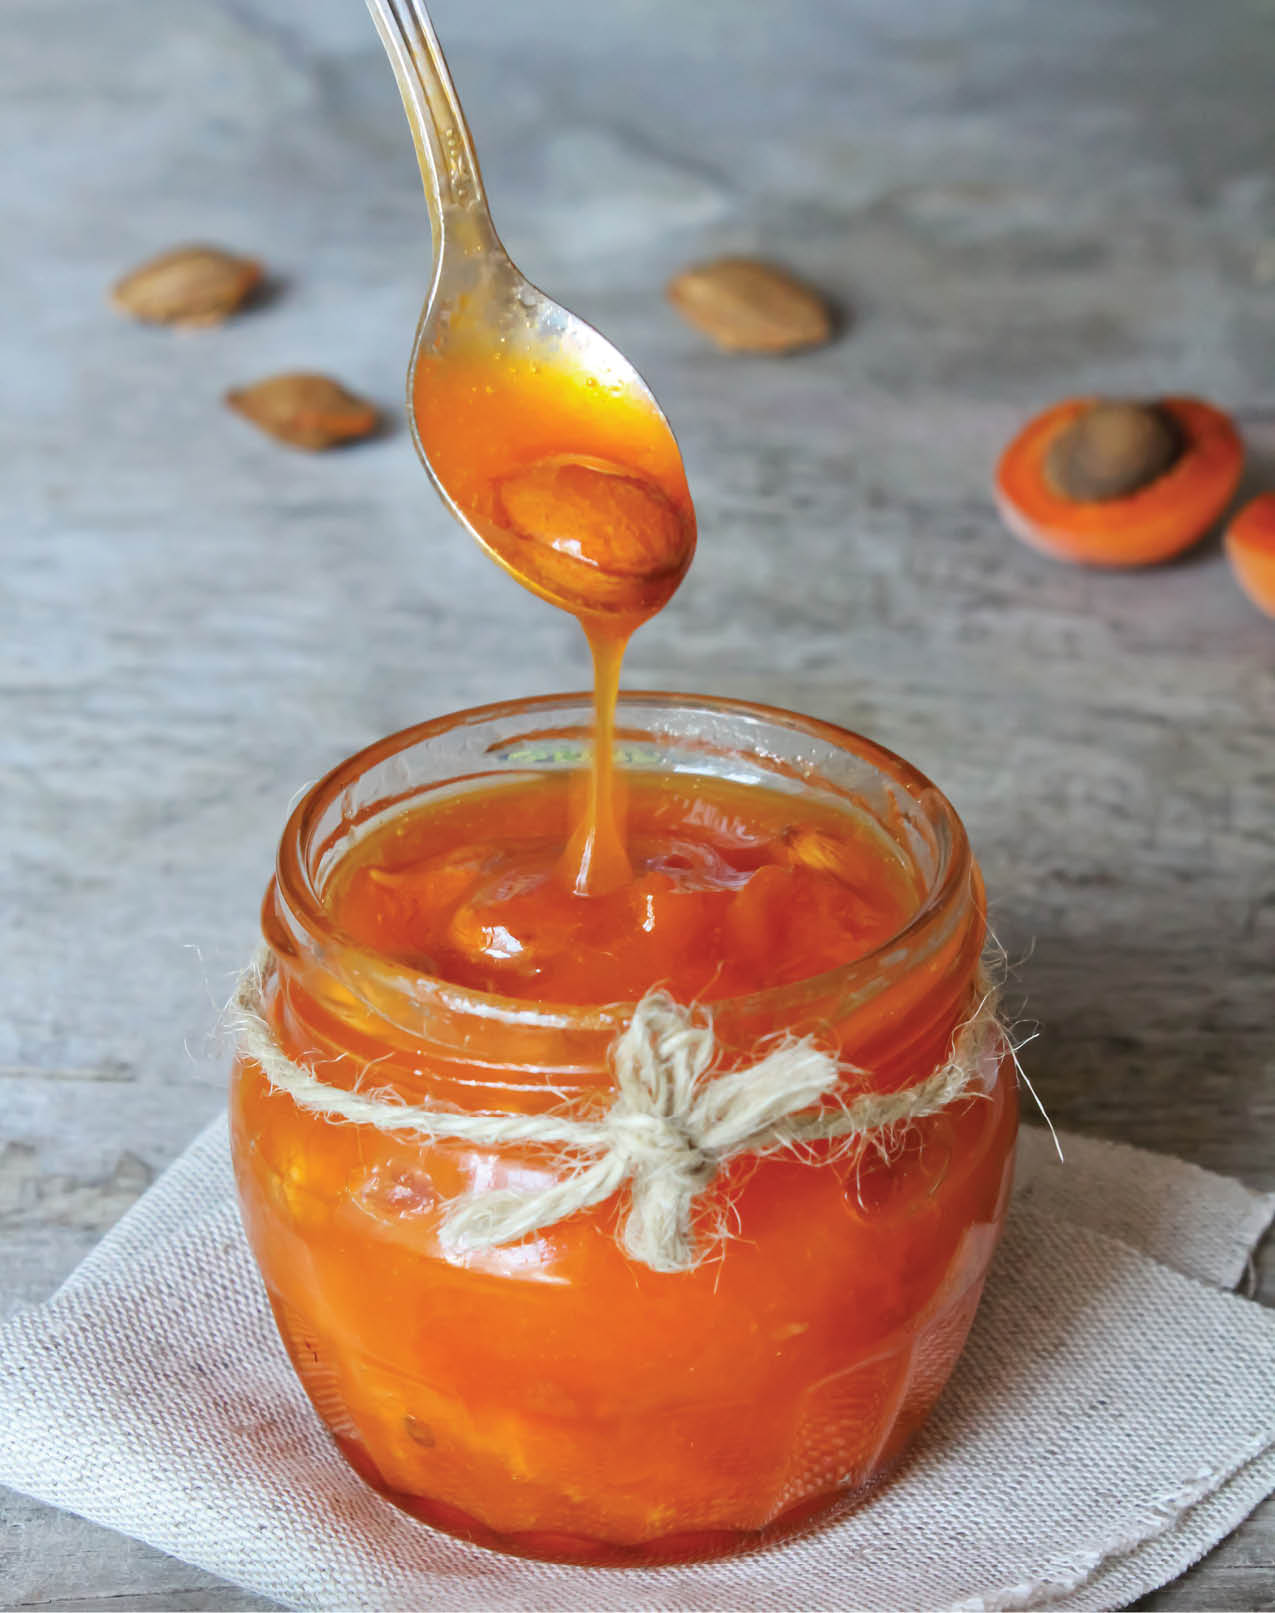 Apricot Jam with Kernels | Living Magazine